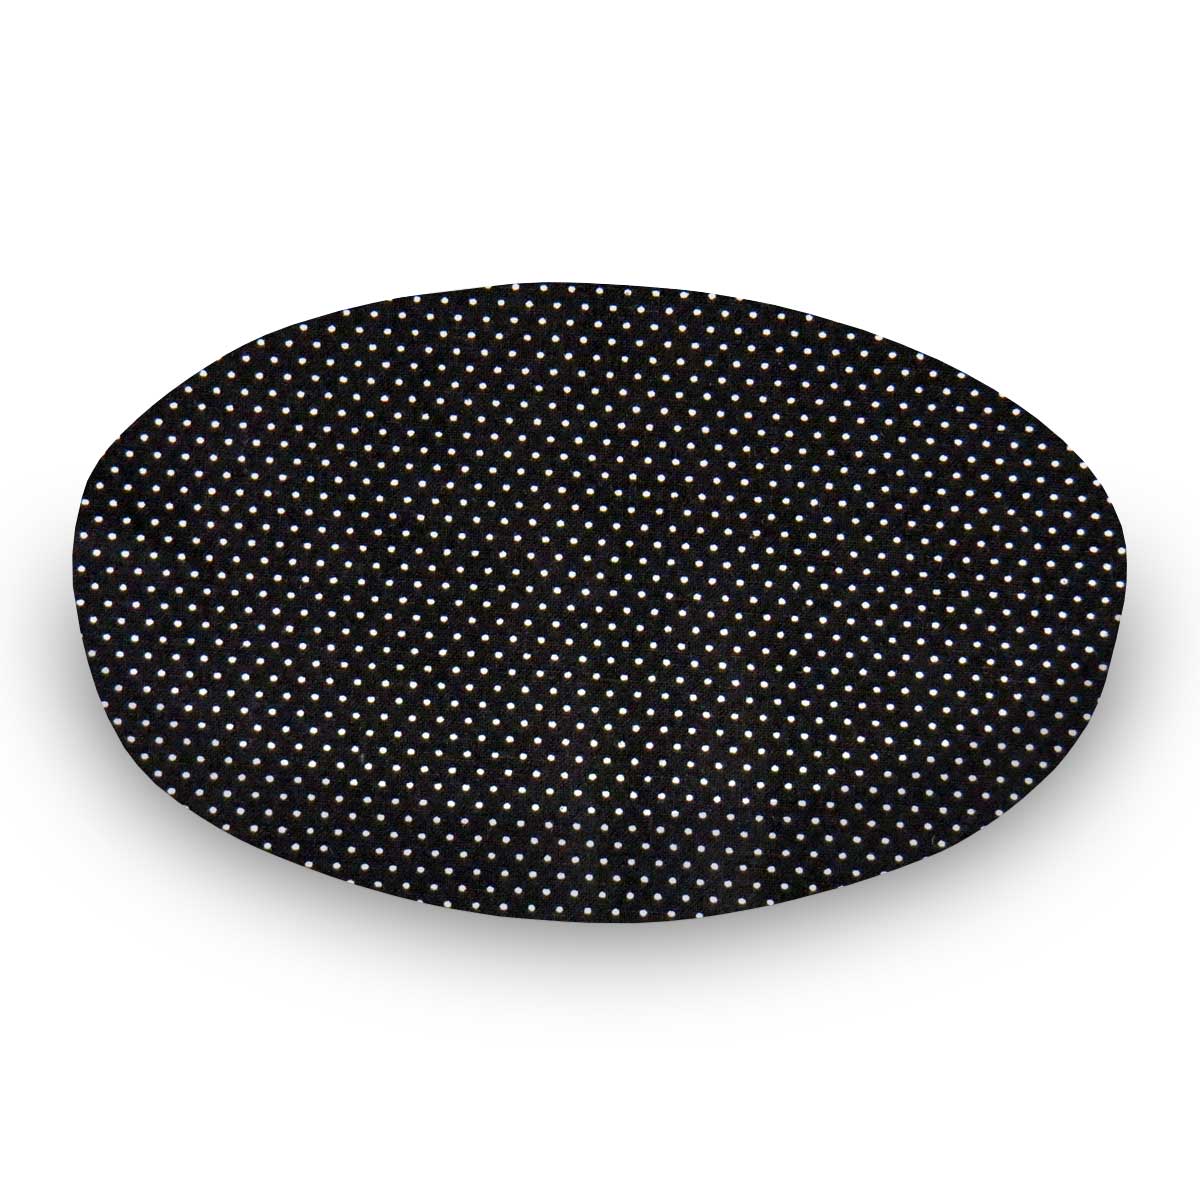 Oval Crib (Stokke Sleepi) - Pindots Black - Fitted  Oval